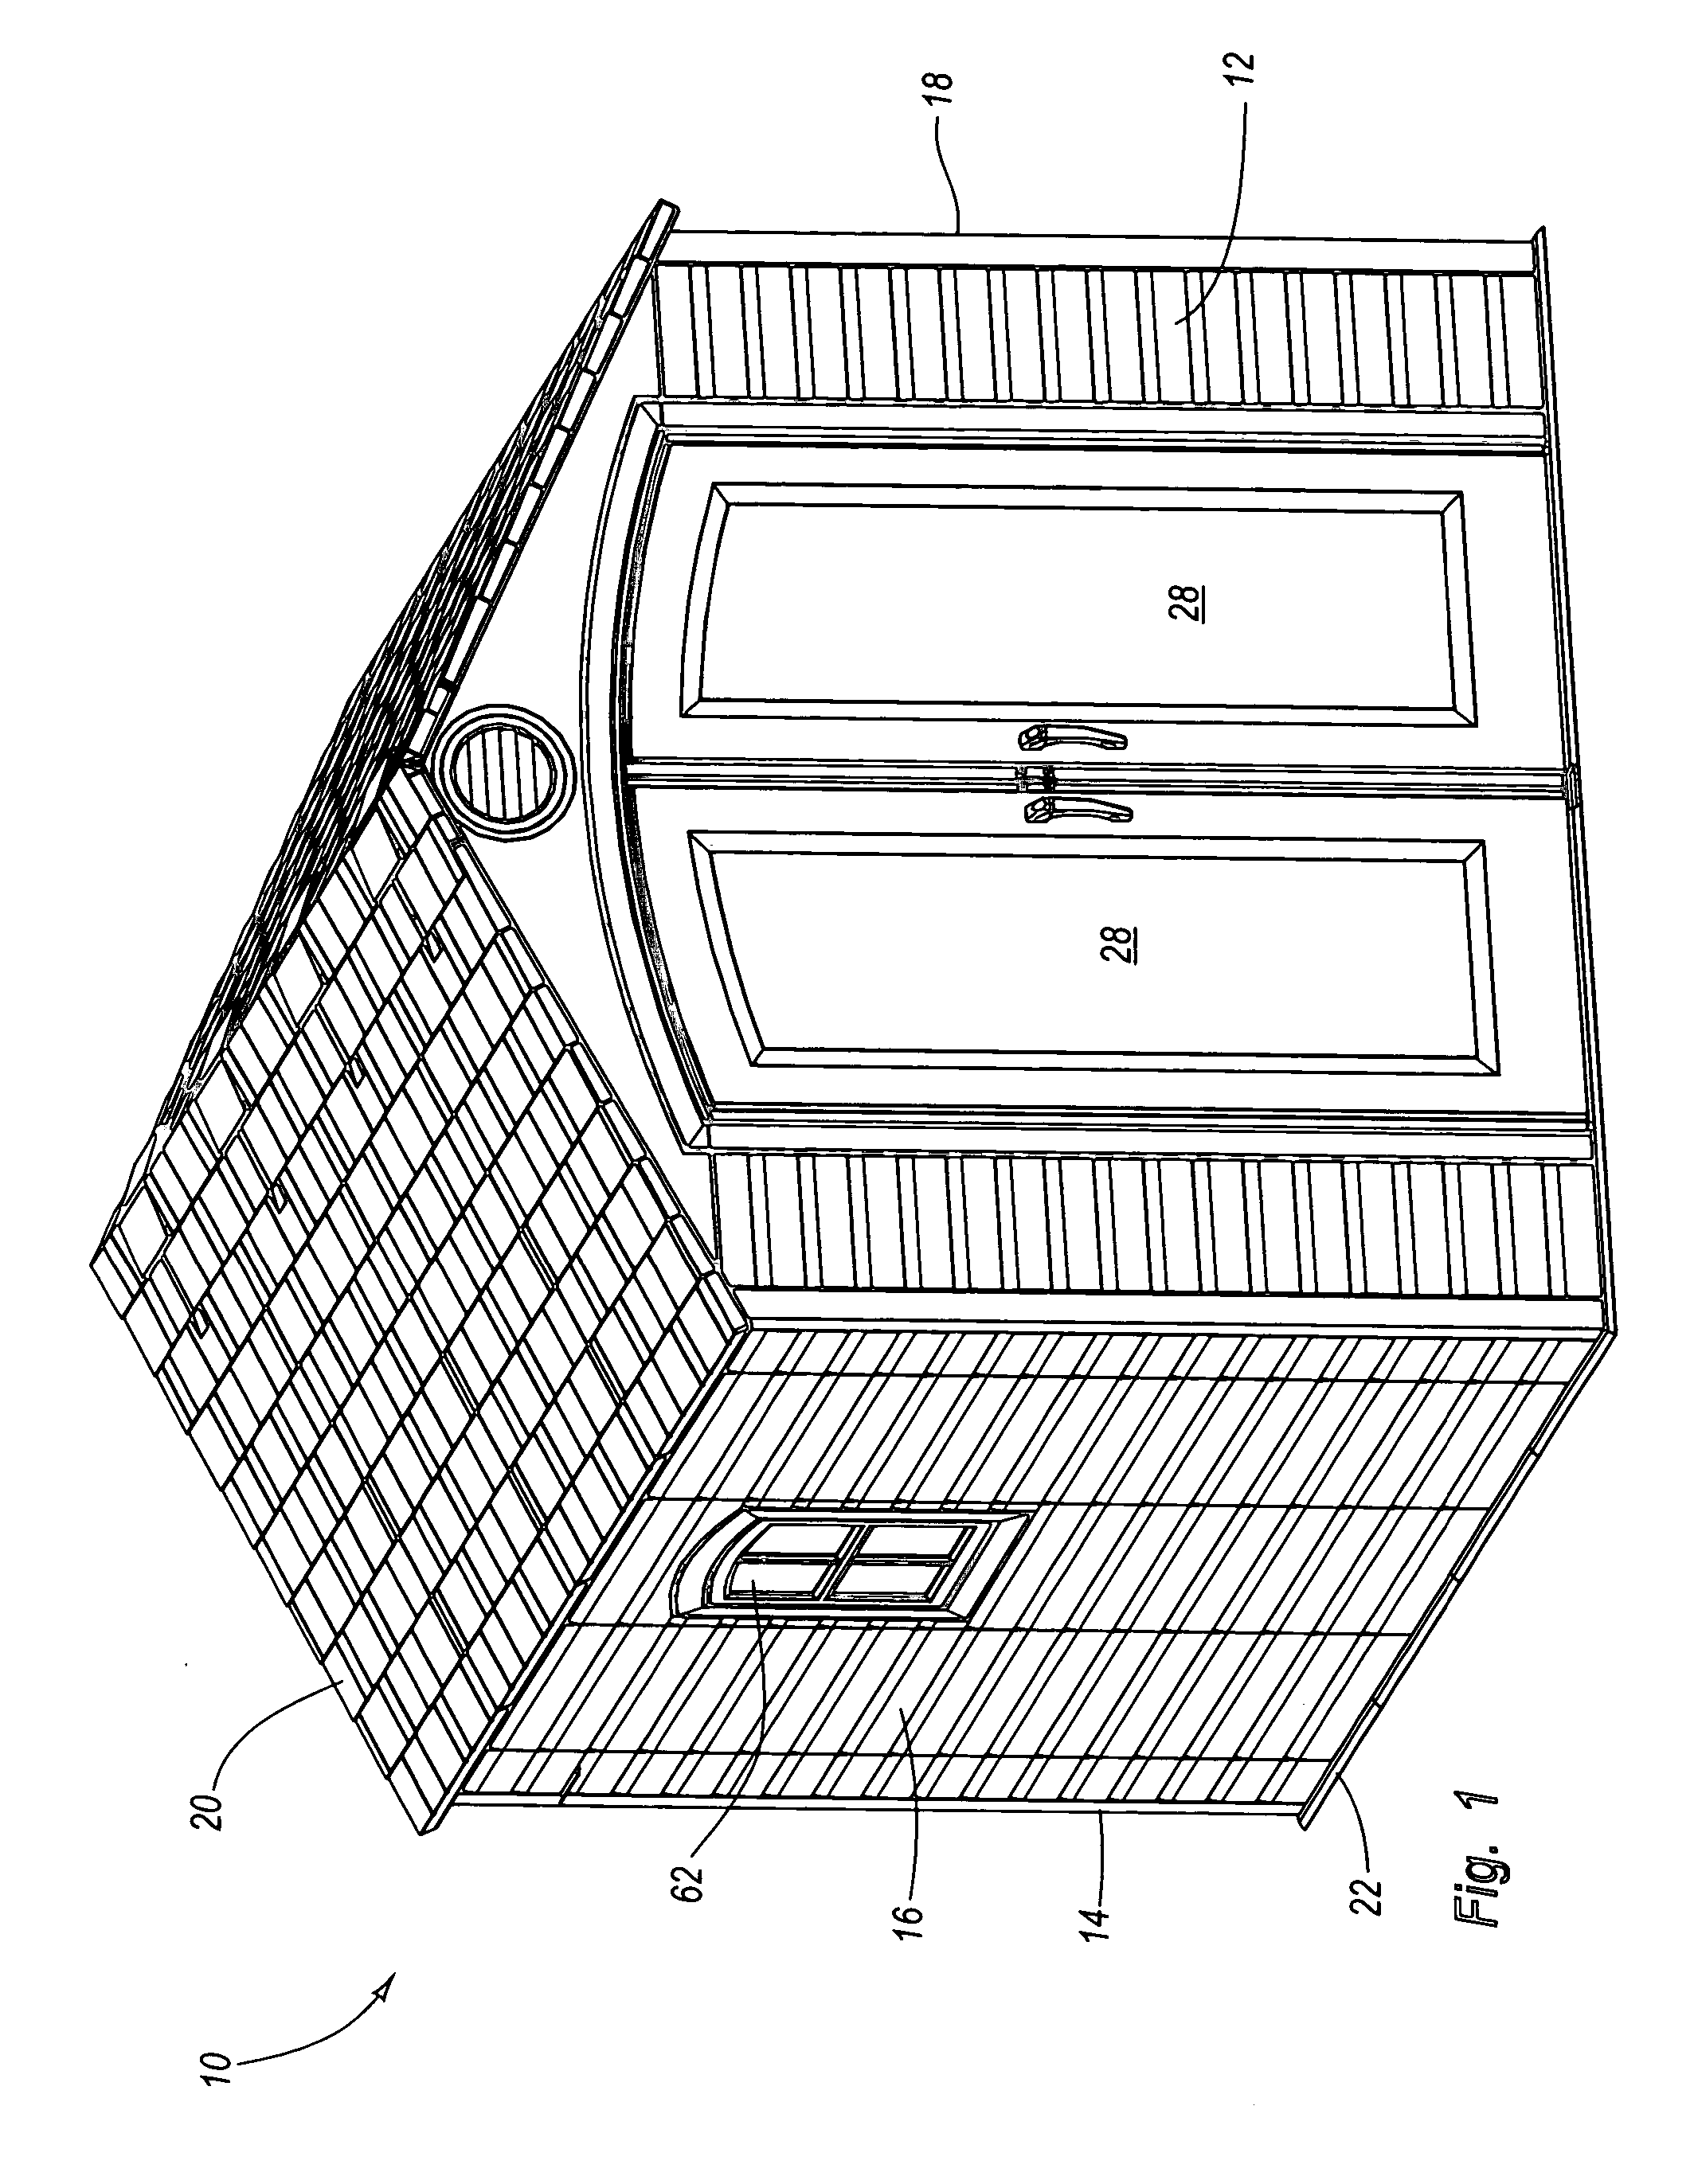 Floor for a modular enclosure